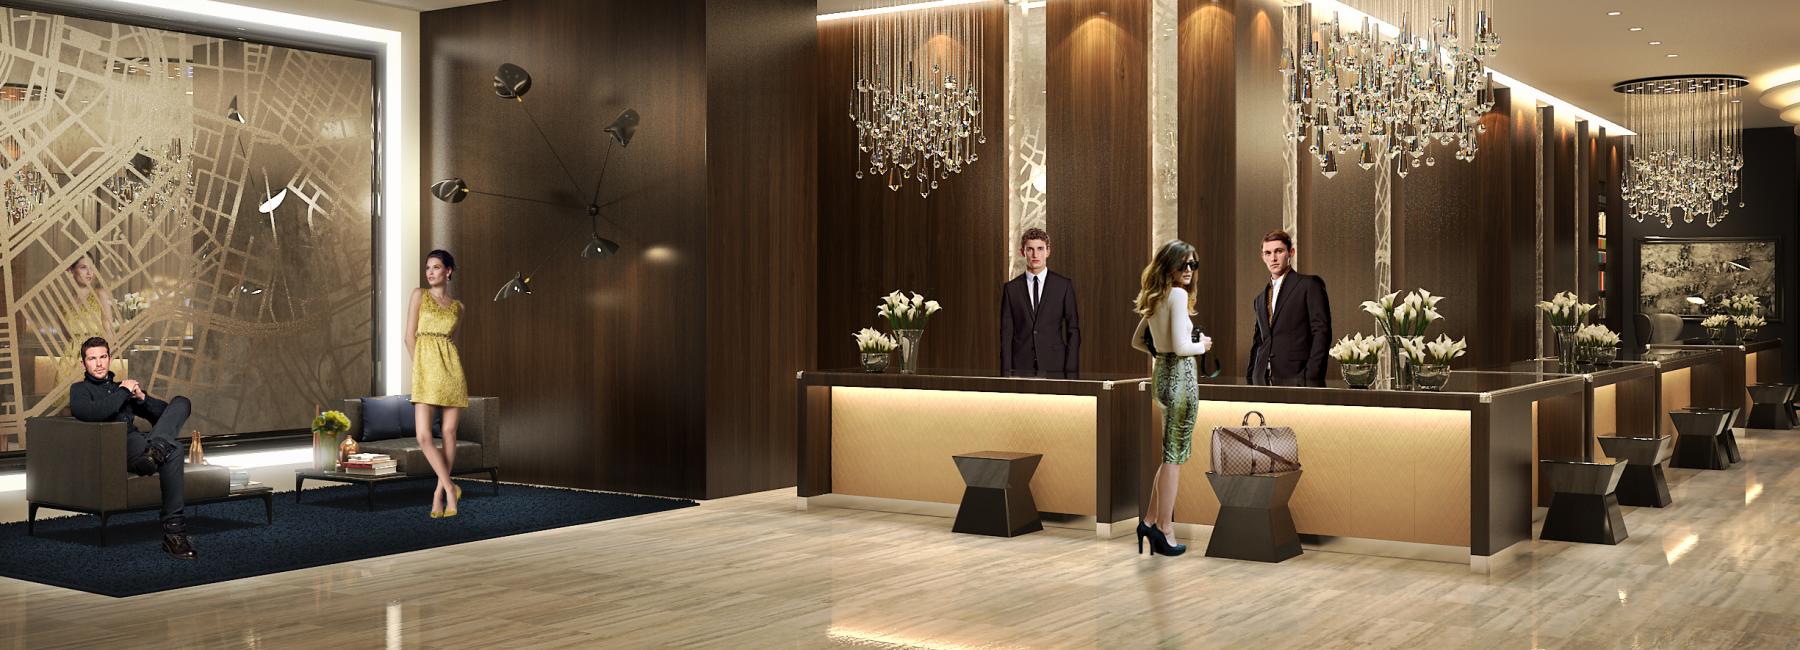 hilton expoforum hotel reception, design lwa